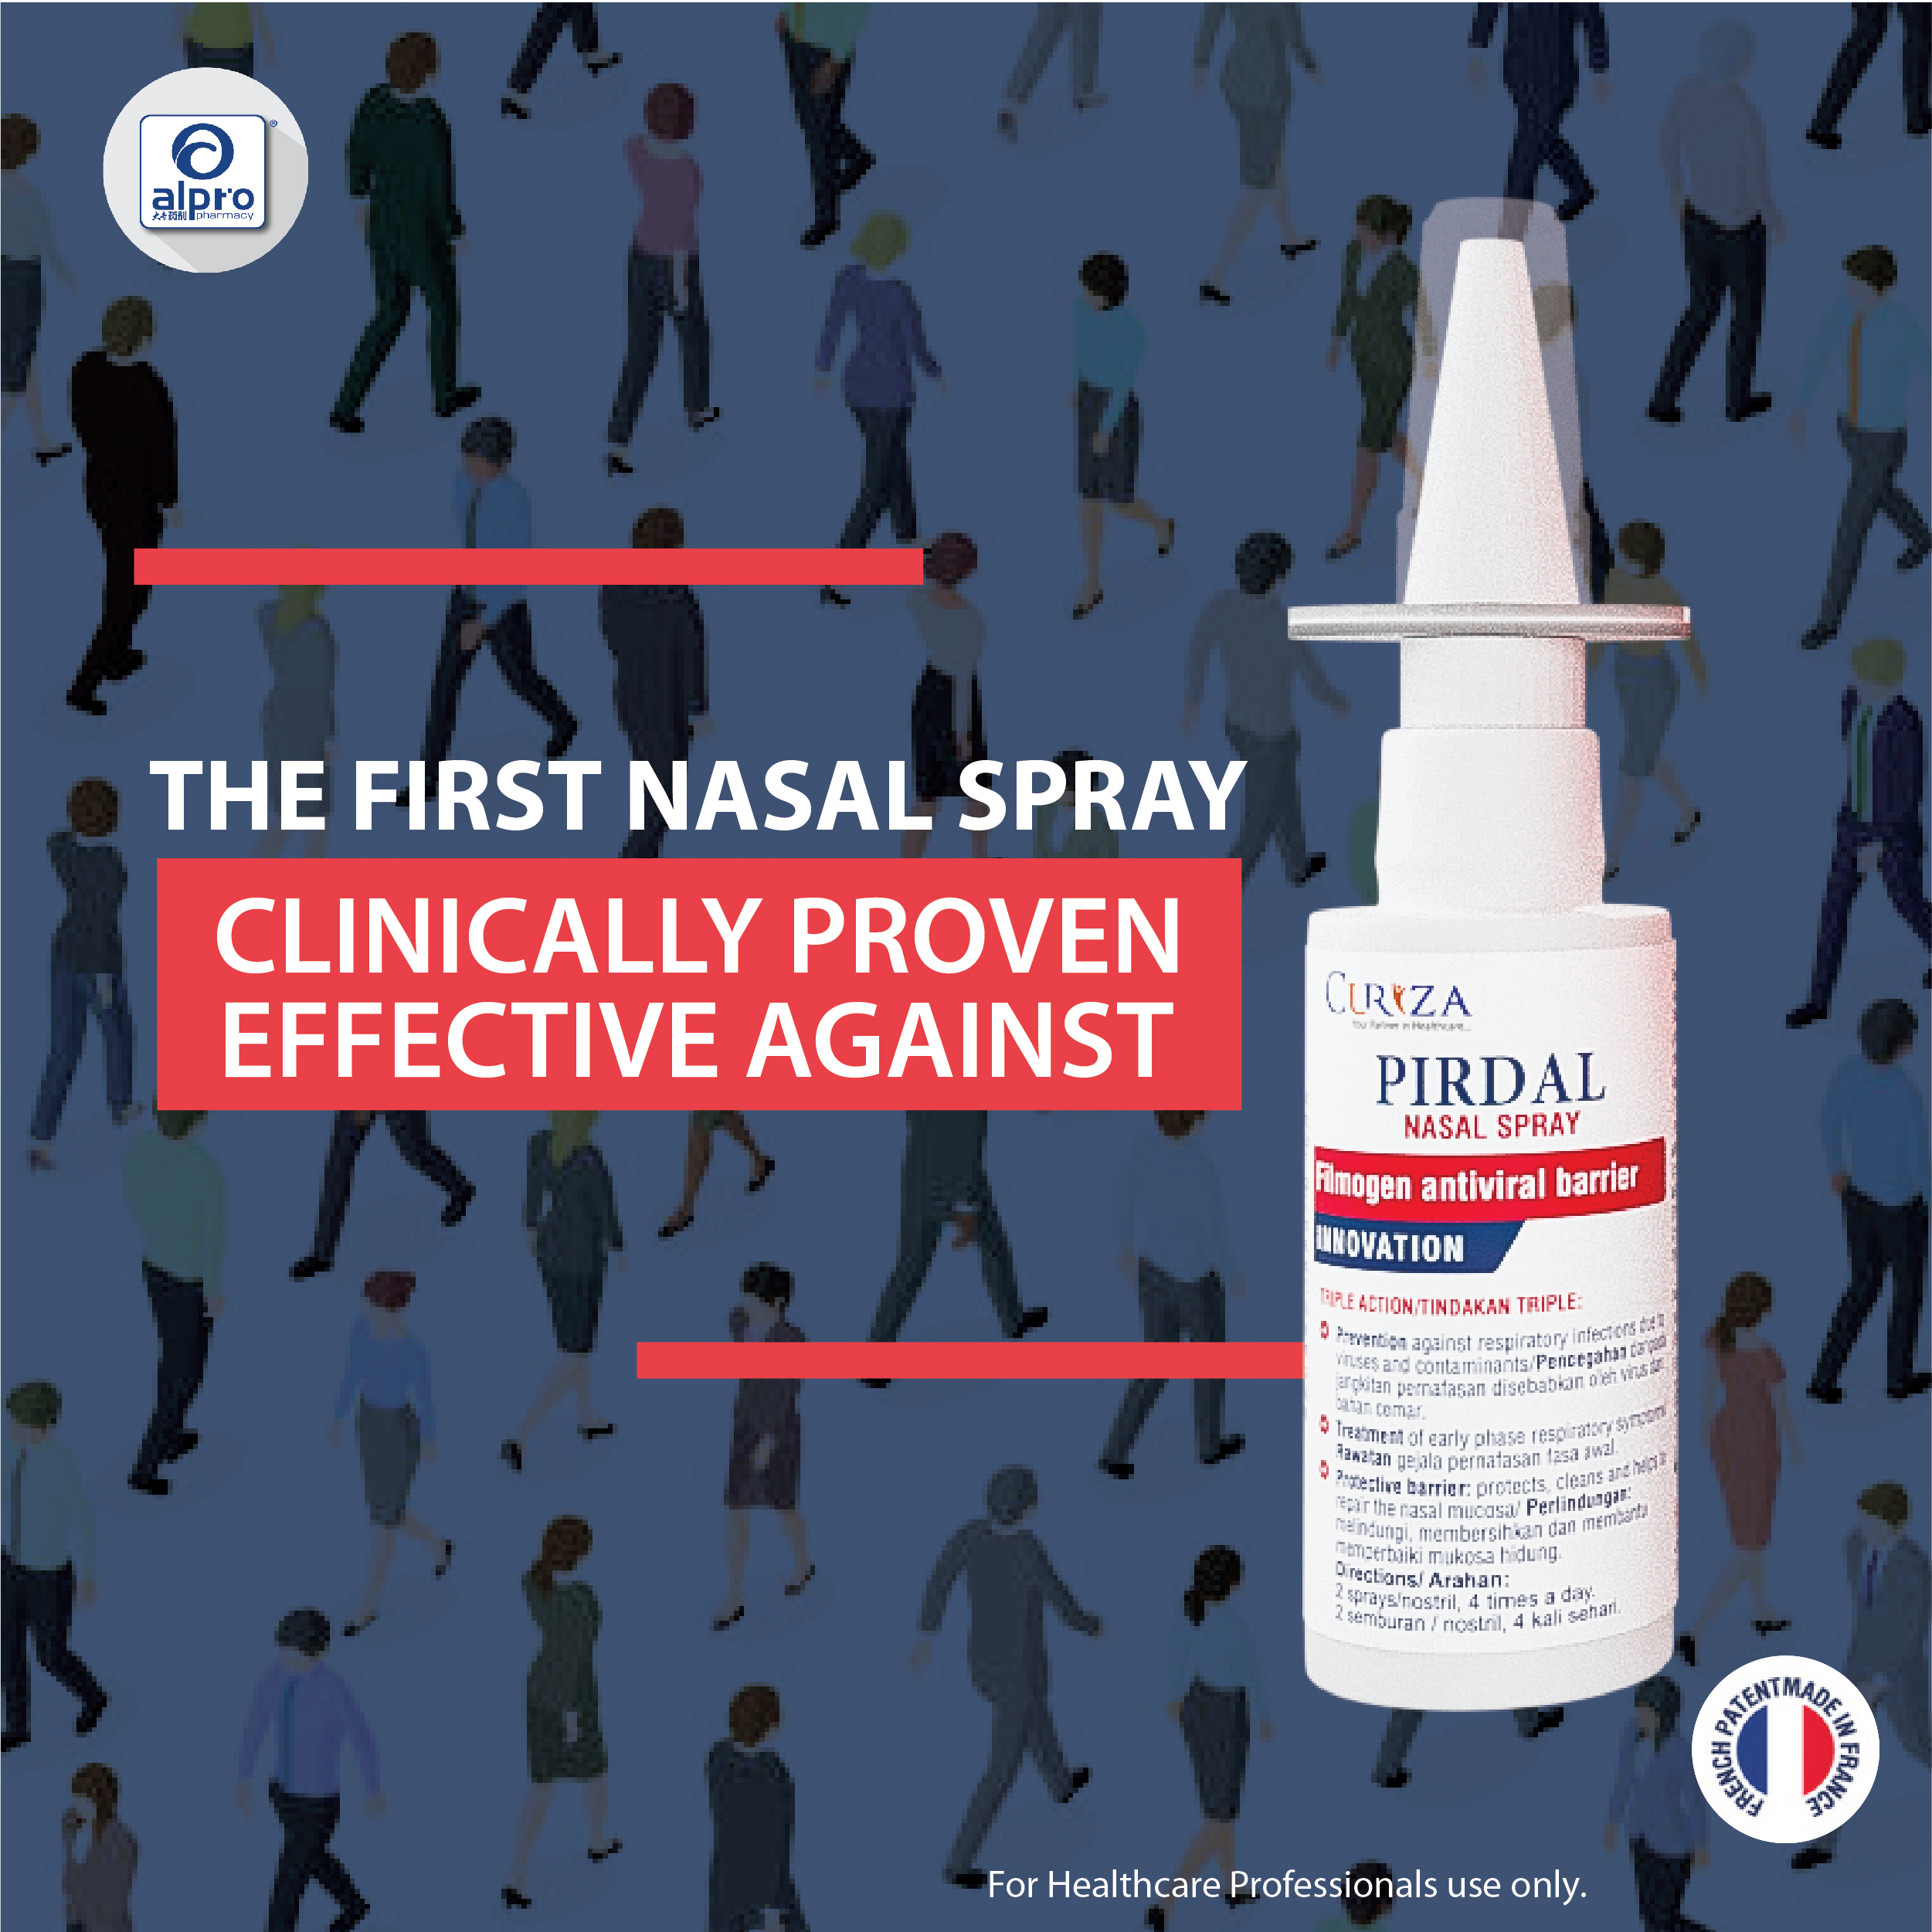 Pirdal nasal spray